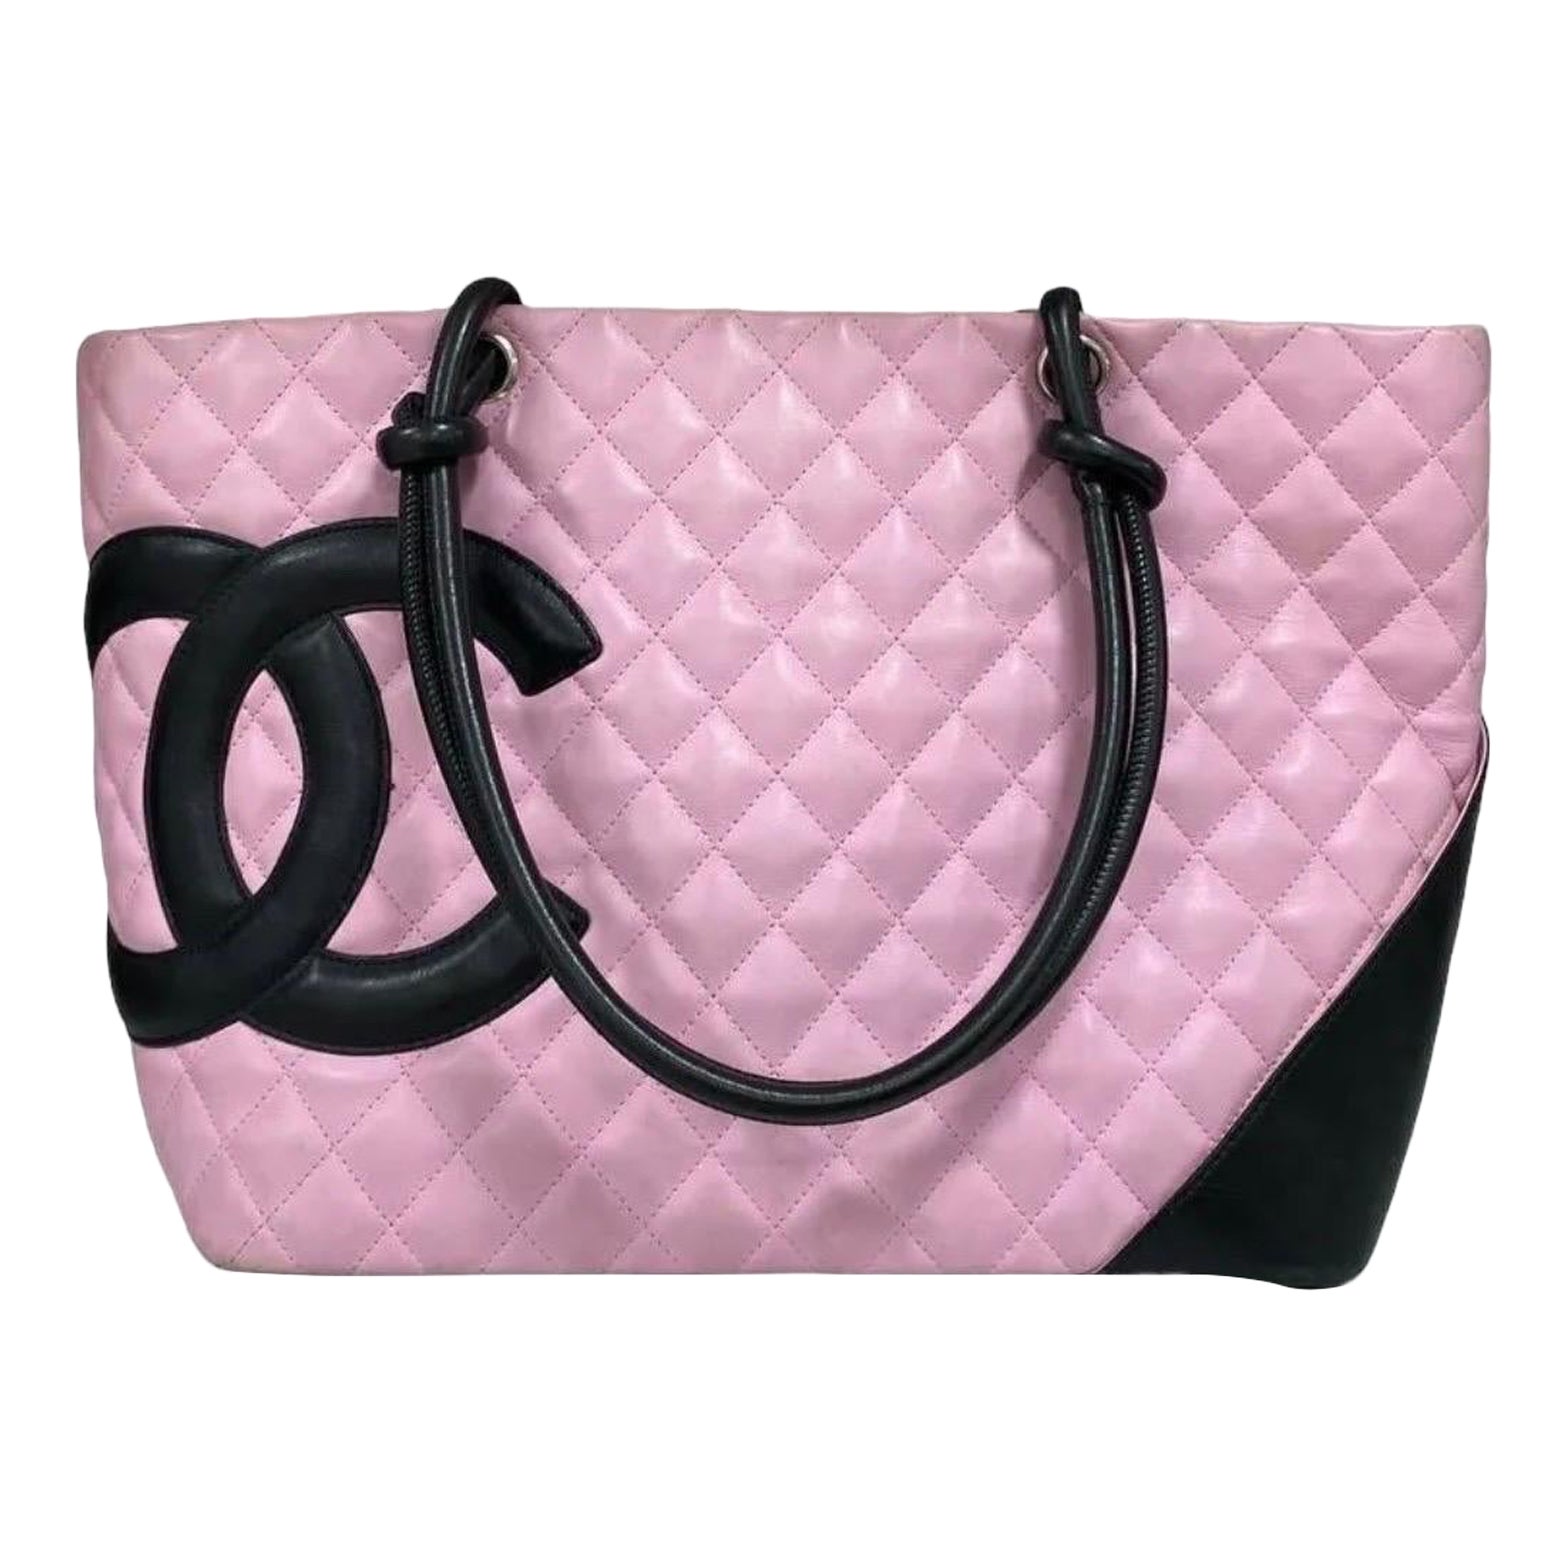 2005 Chanel Cambon Pink Leather Shoulder Bag